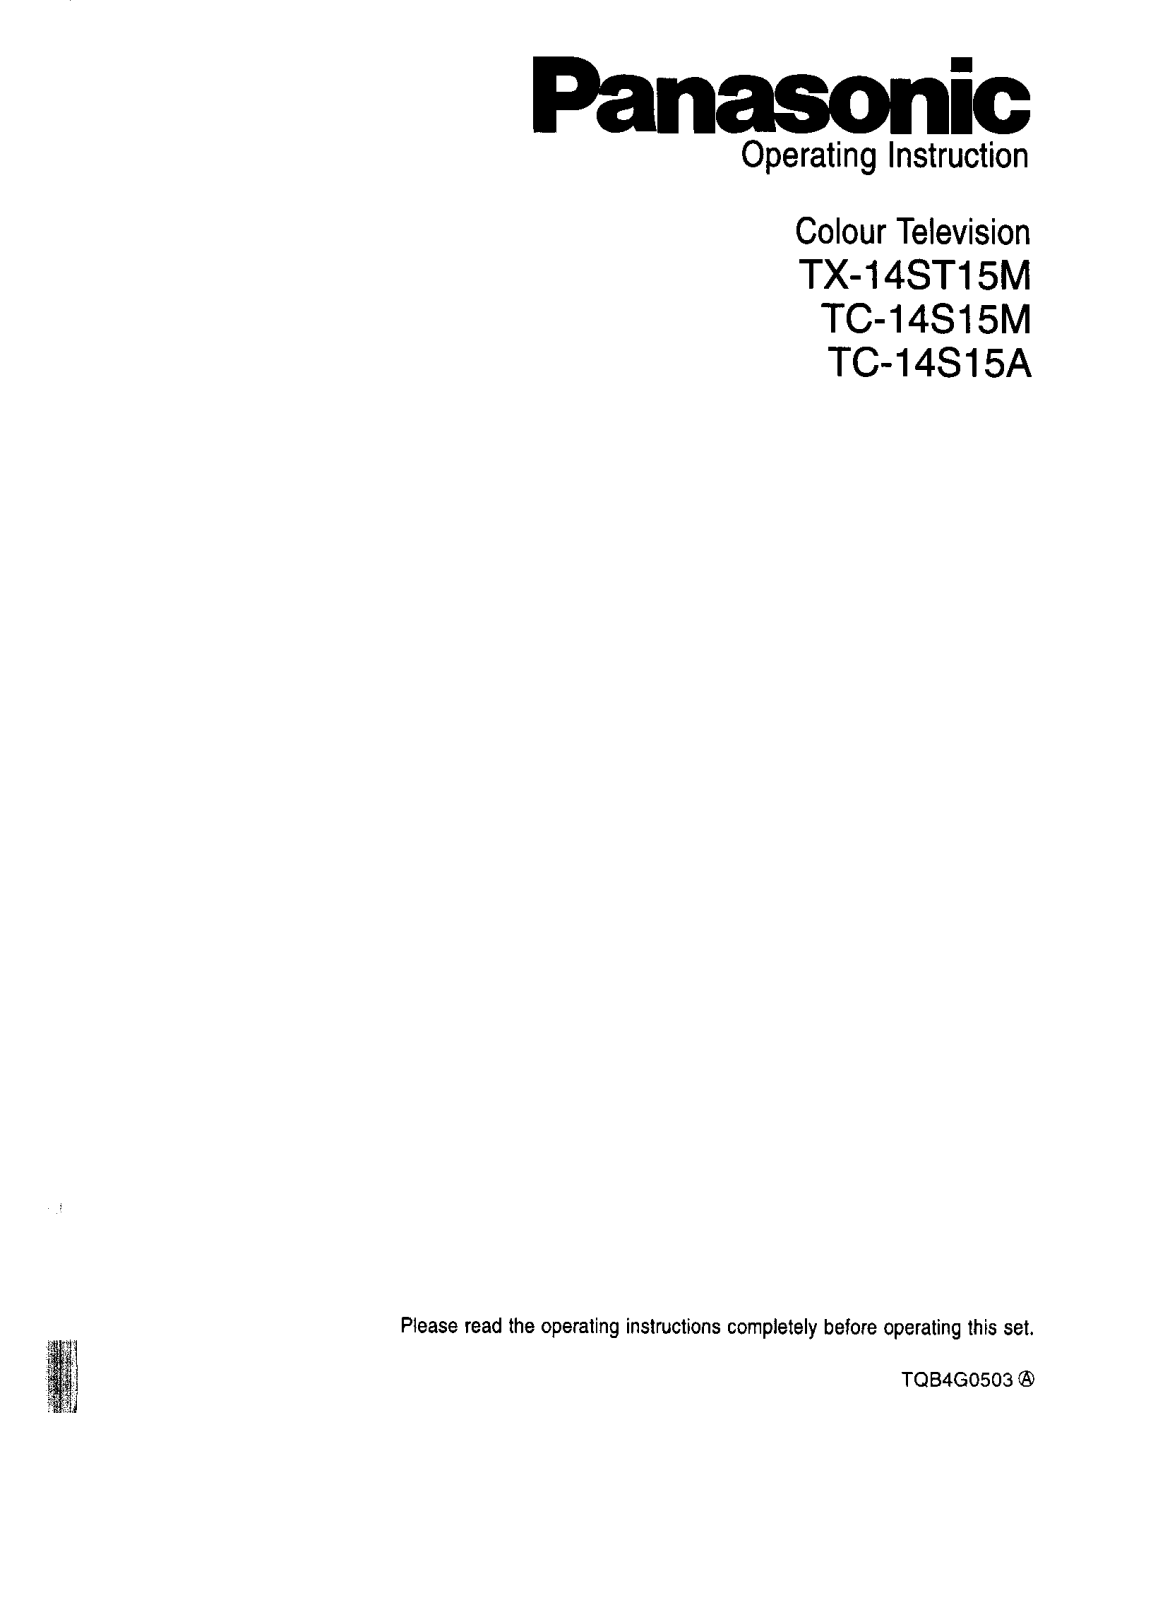 Panasonic TC-14ST15A User Manual